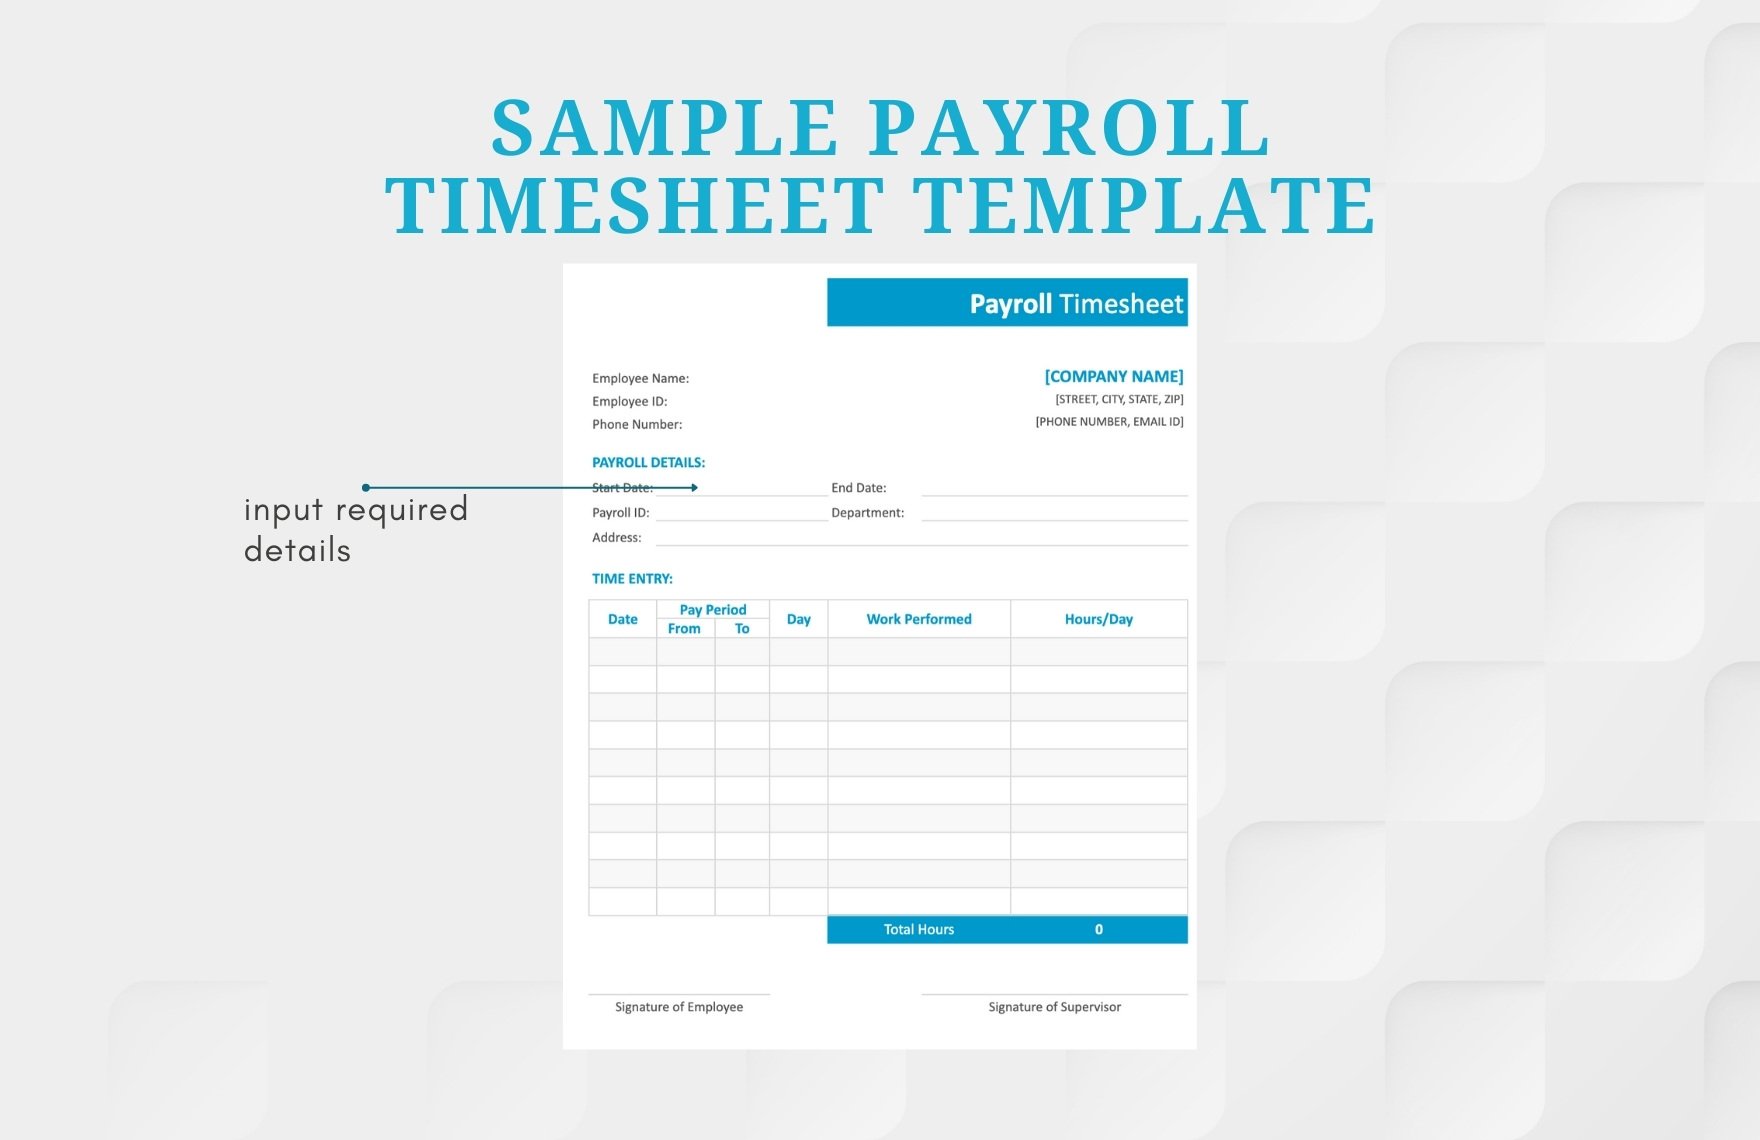 Sample Payroll Timesheet Template